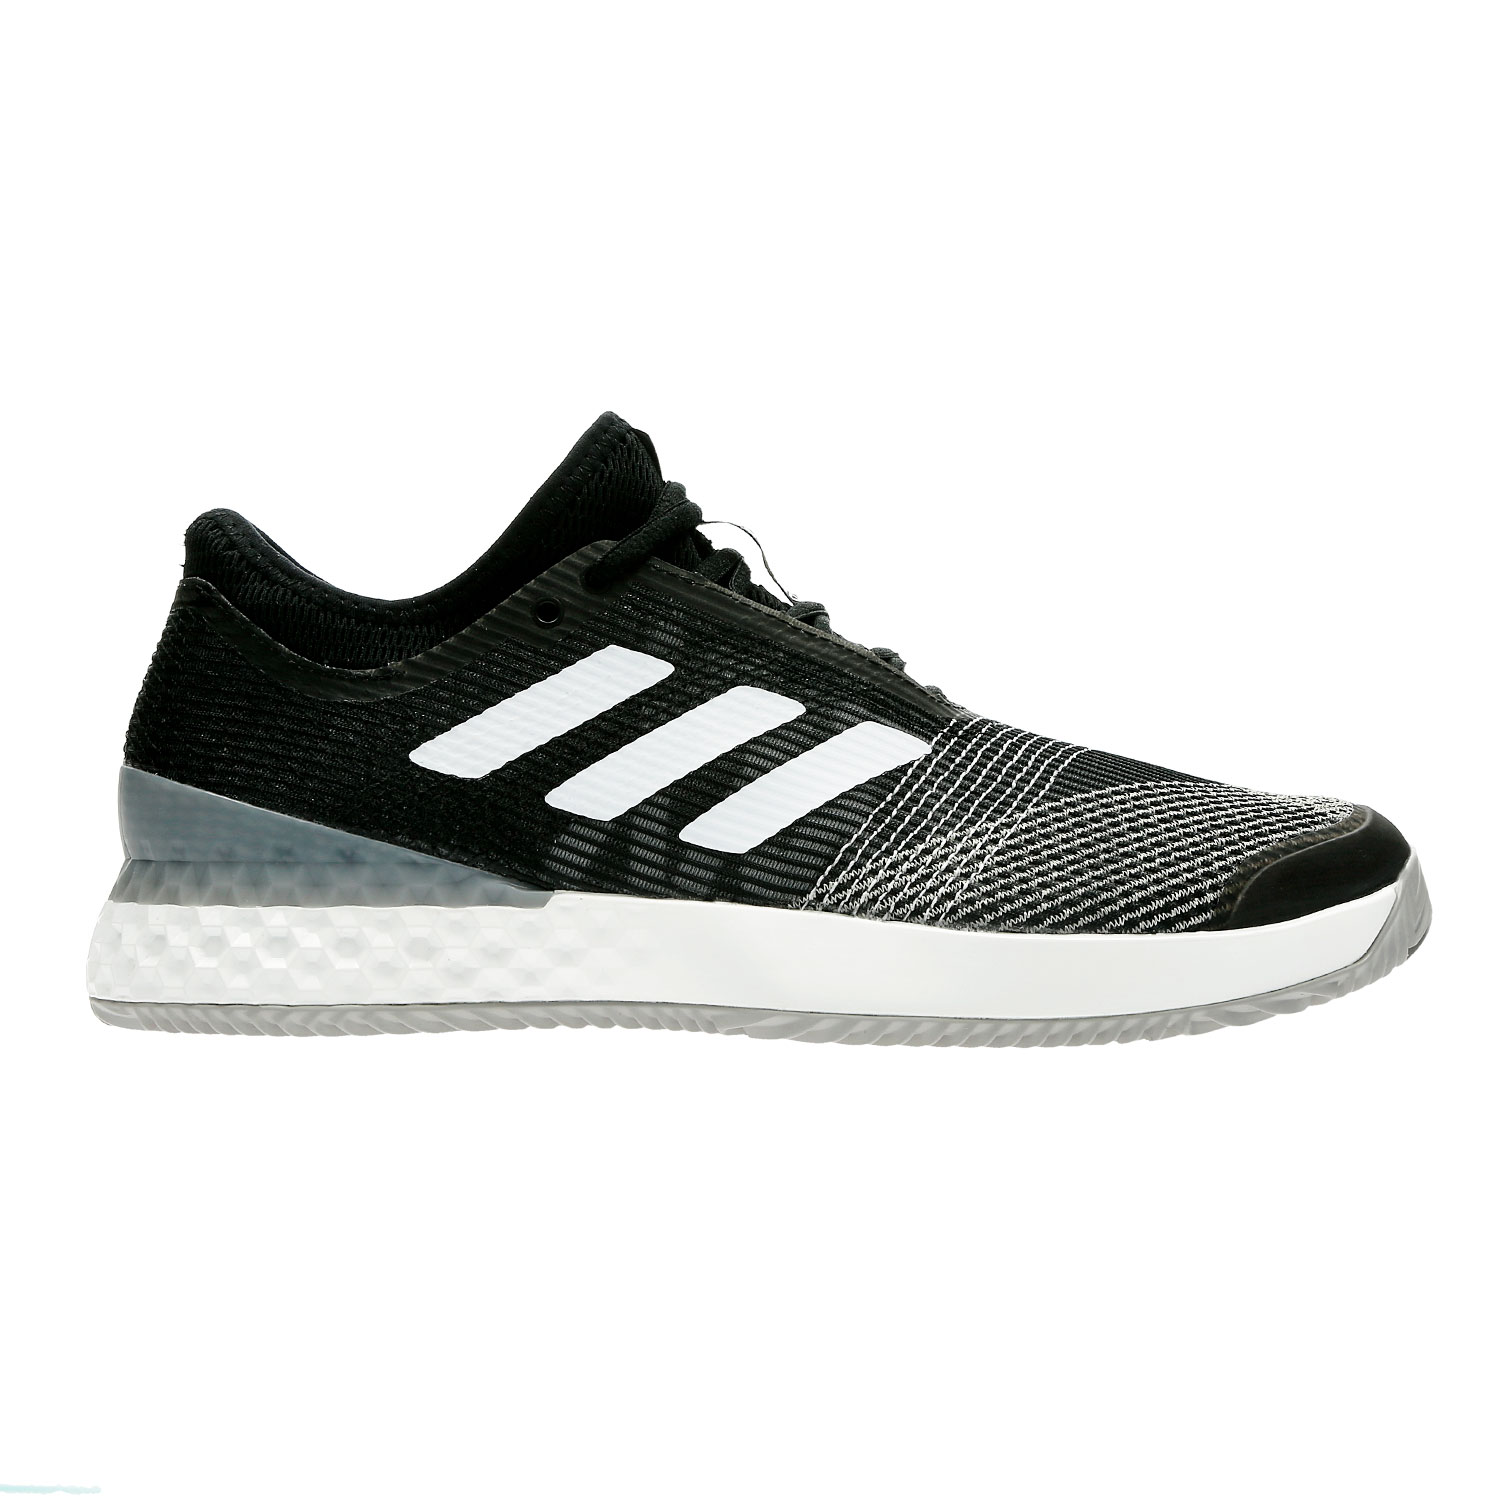 adidas Adizero Ubersonic 3.0 Clay Men's Shoes - Black/White